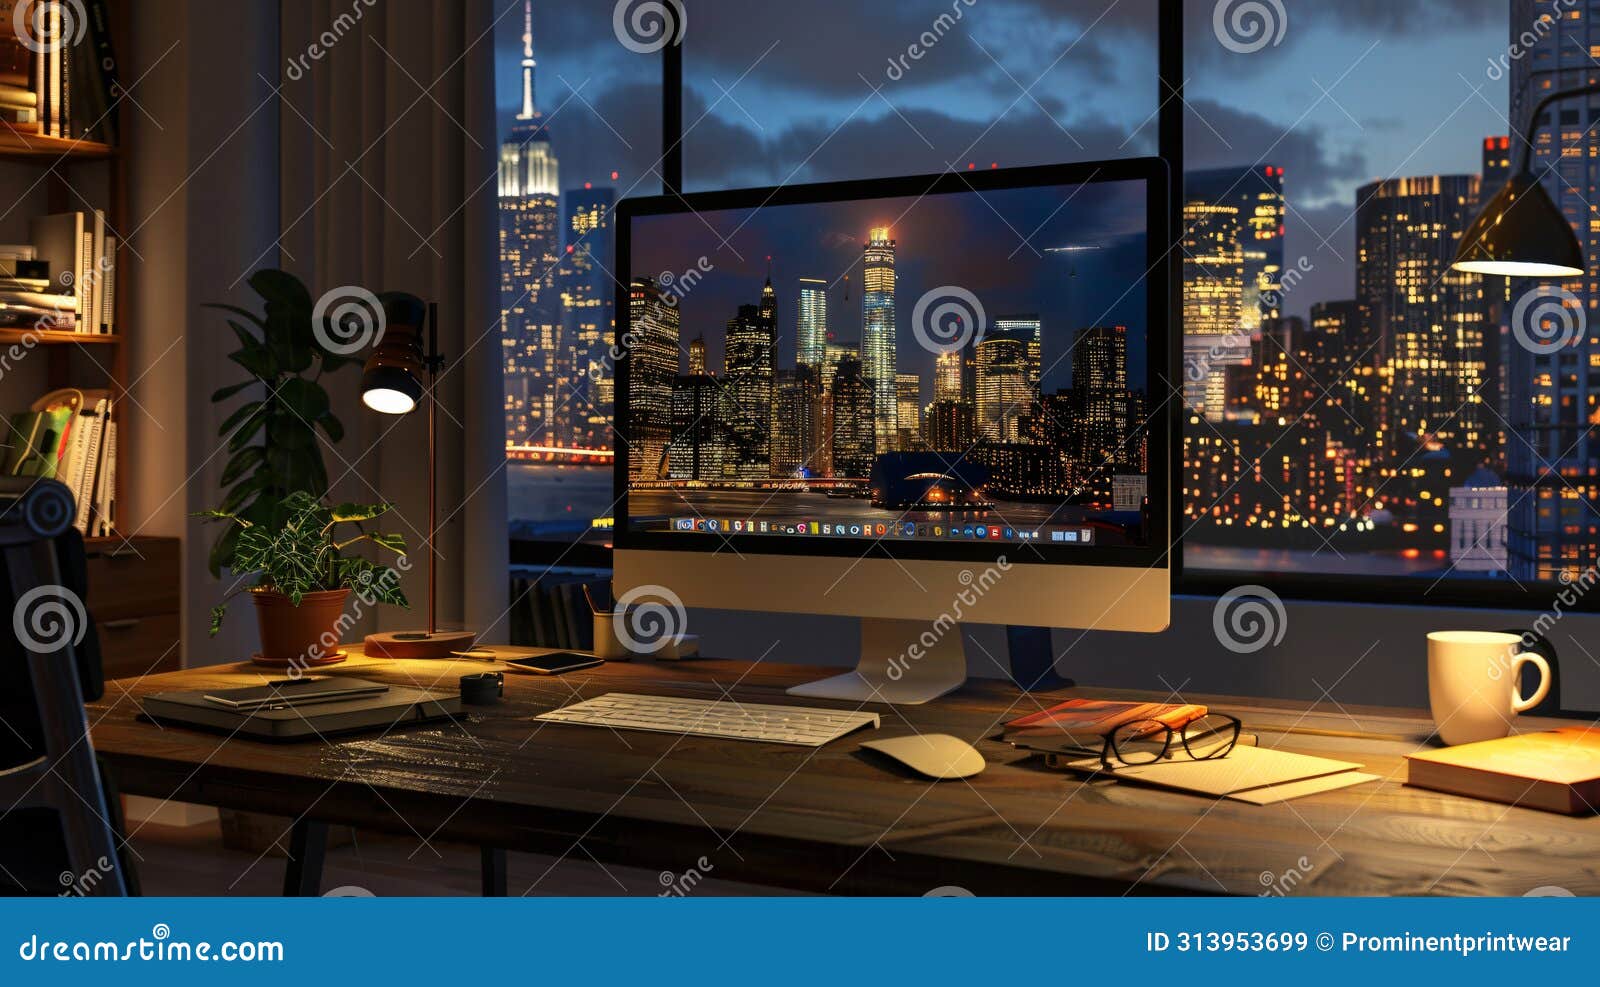 modern home office setup with imac, night time, city skyline on the screen